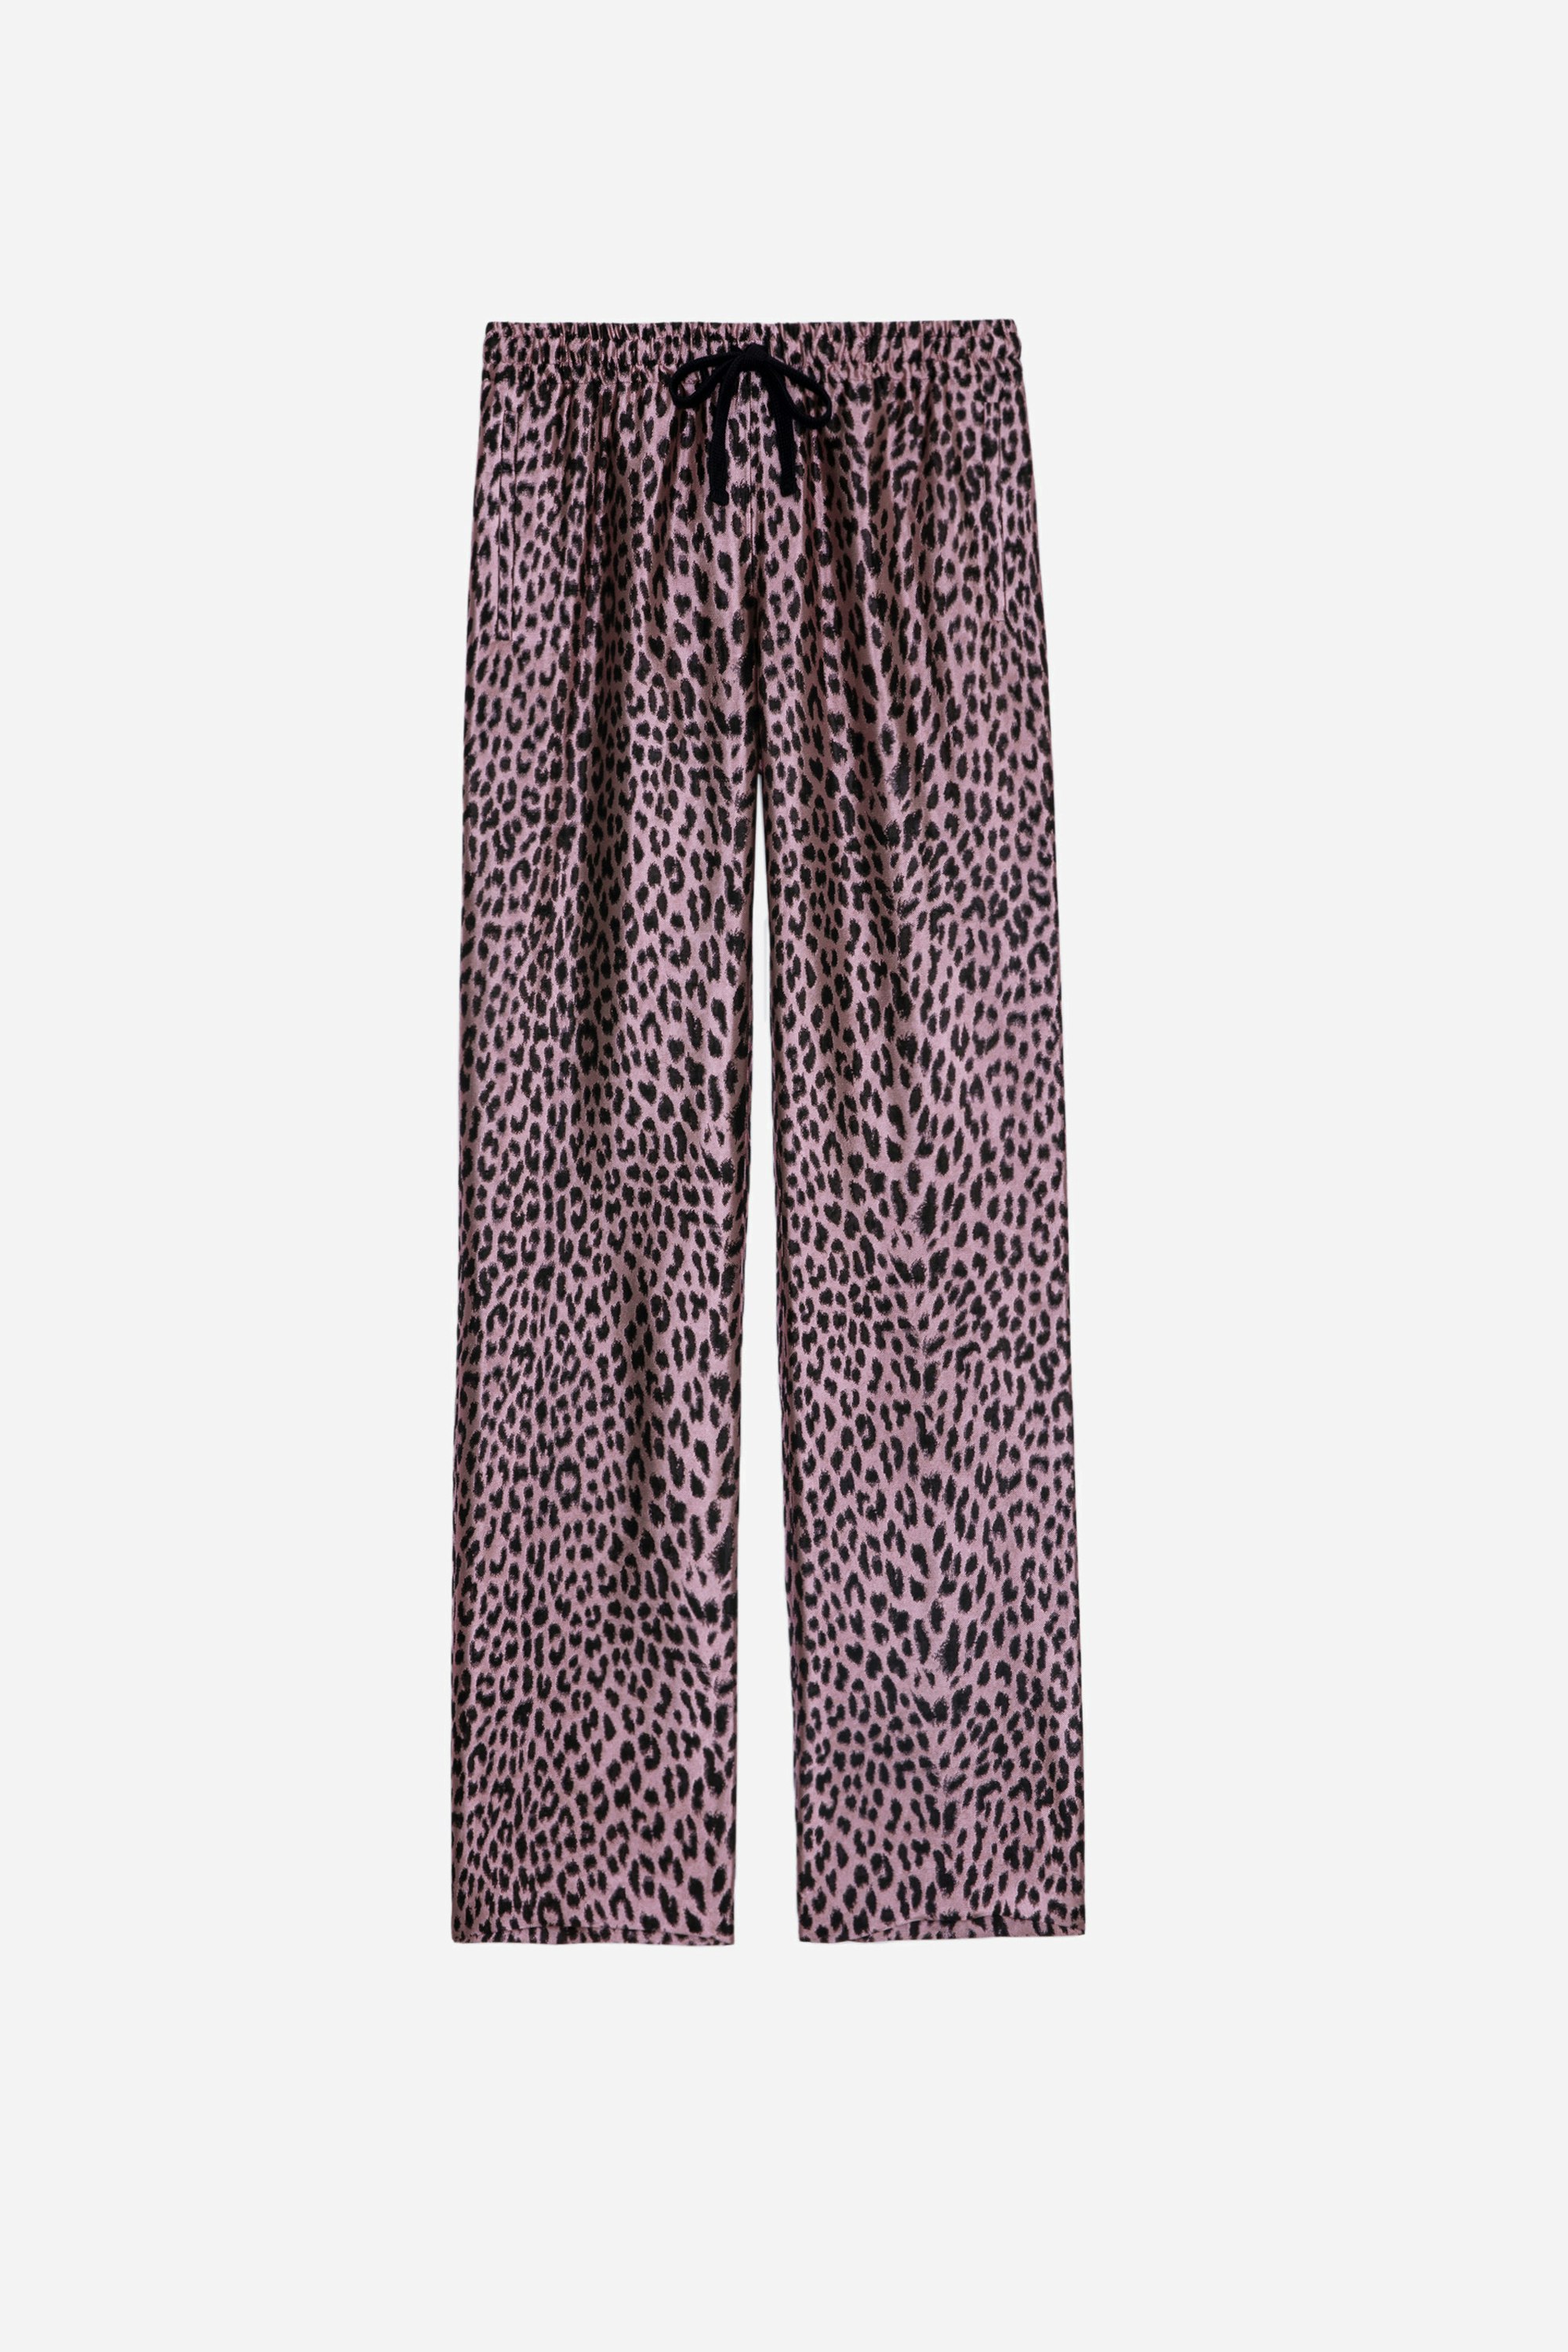 Pomy Leopard Jacquard Trousers - Women's pink leopard jacquard trousers